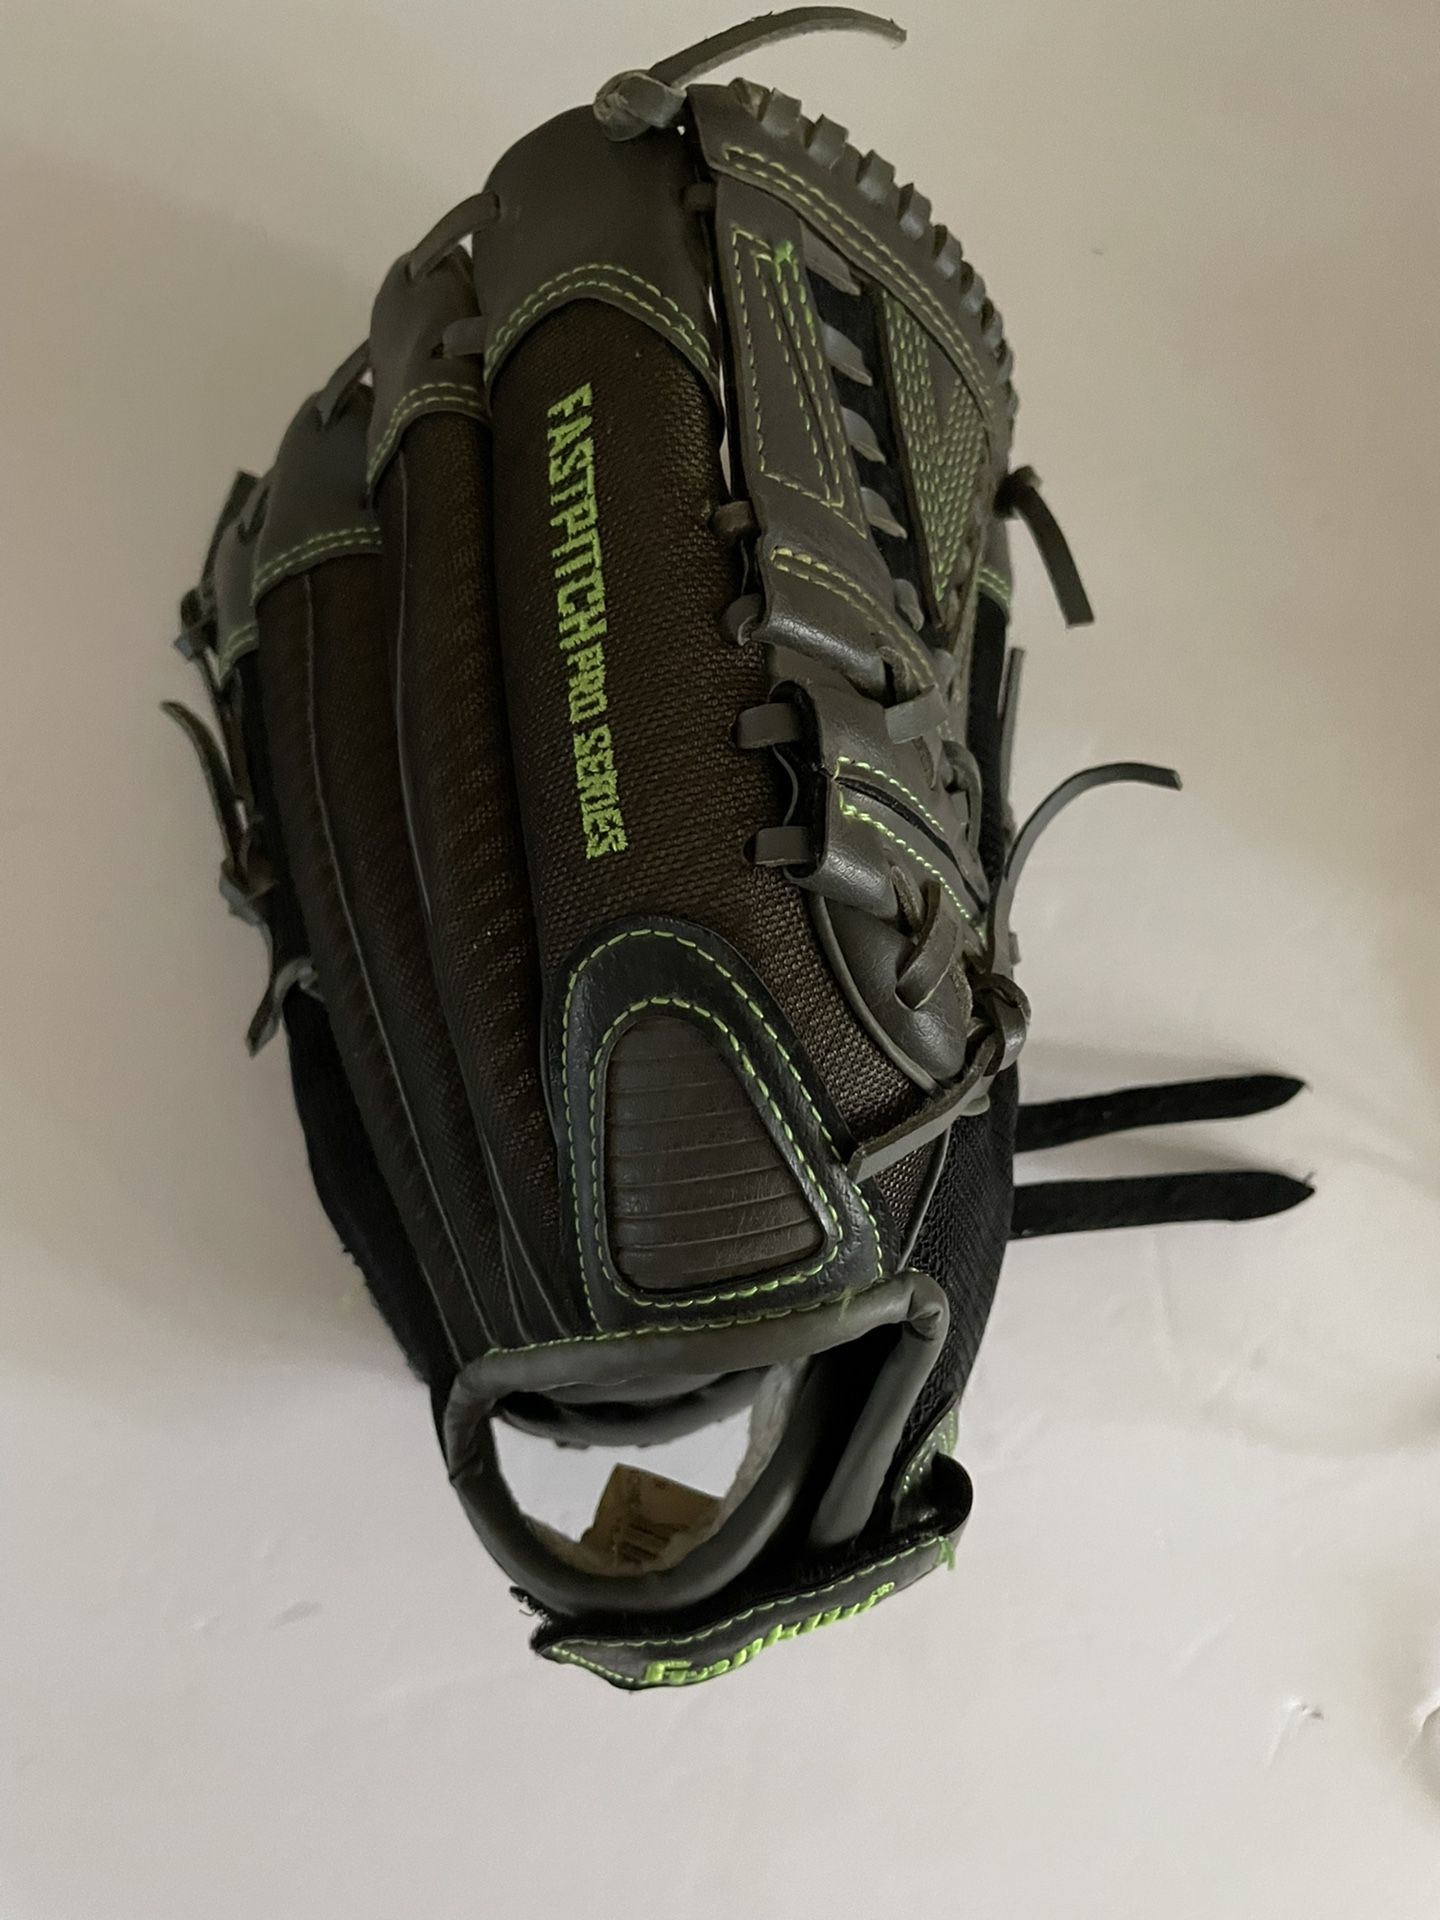 Franklin Fast Pitch Pro Baseball Softball Glove RHT Youth 11" 22433 Black Green